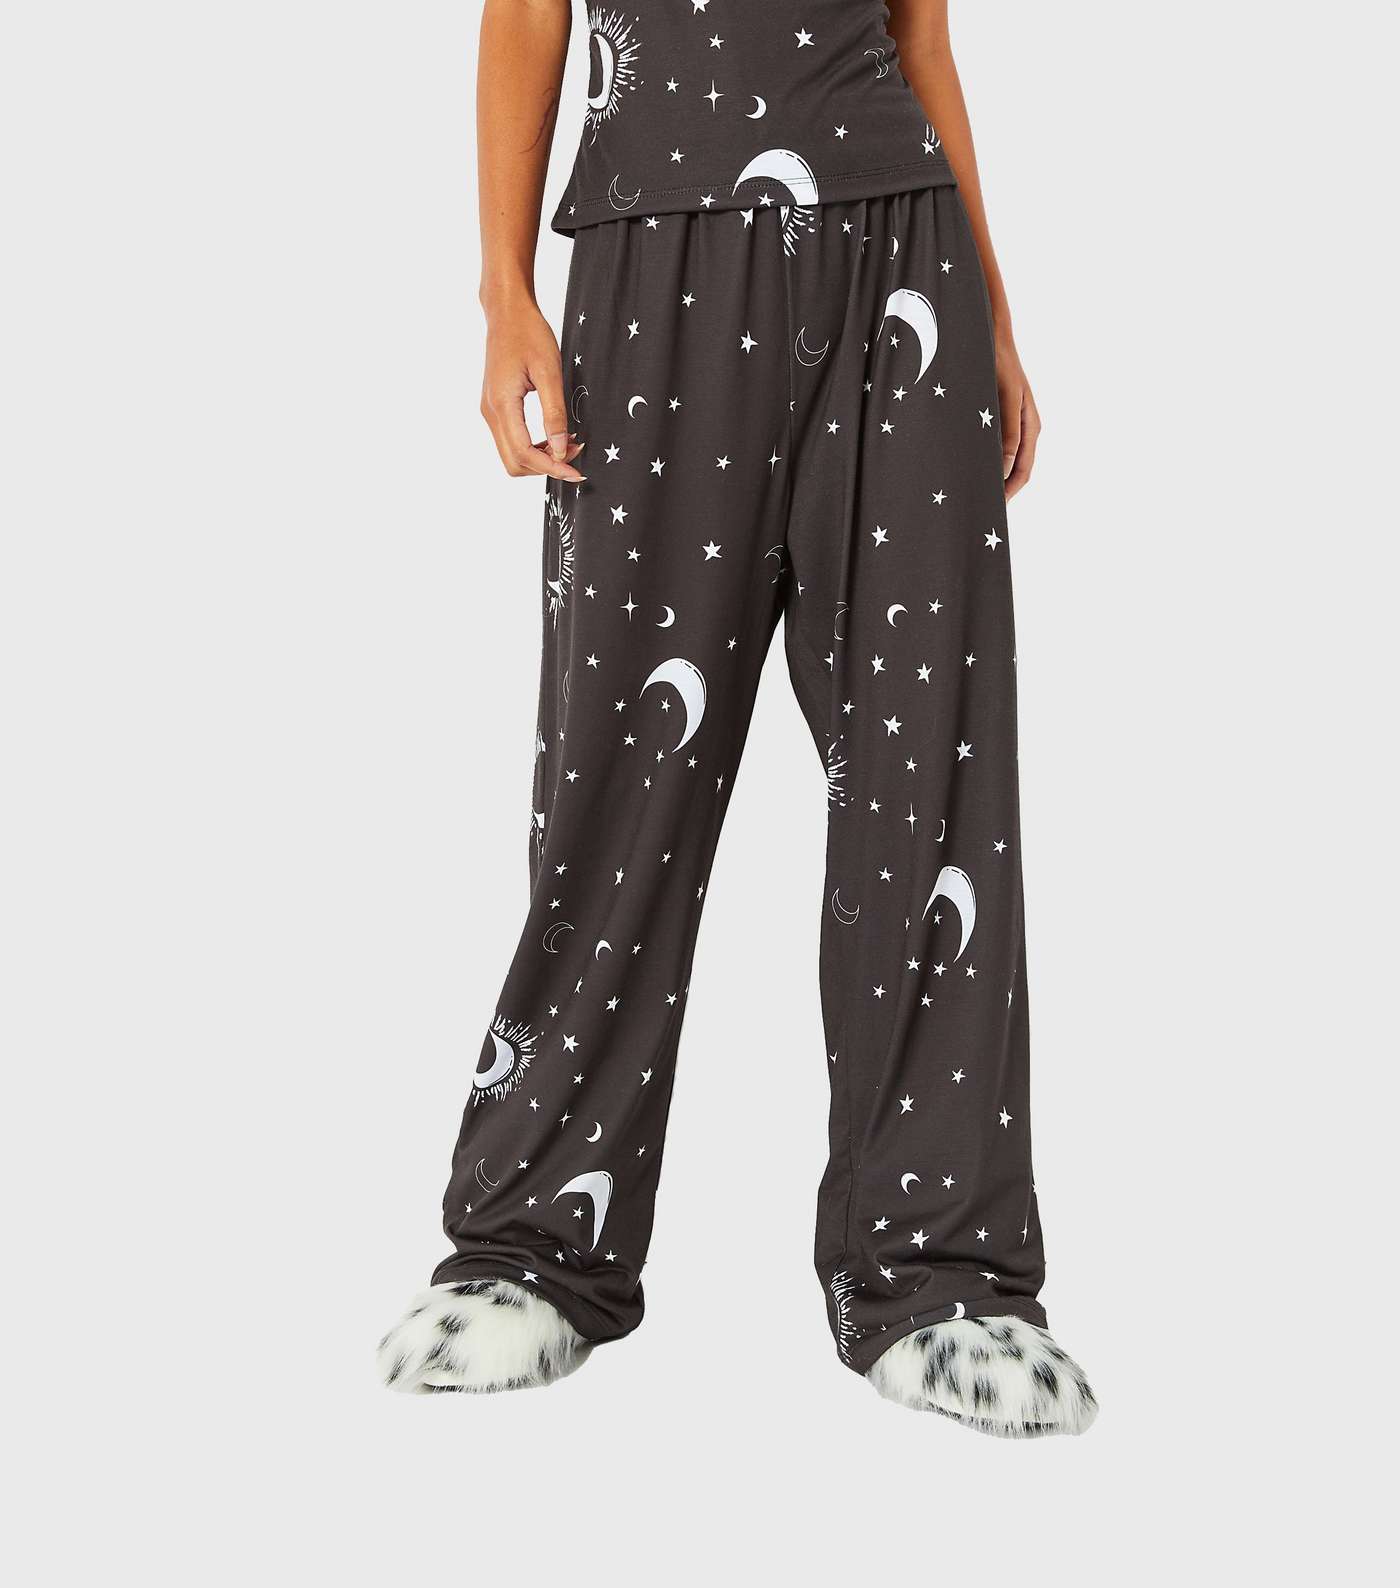 Skinnydip Black Lace Cami Pyjama Set with Celestial Print Image 3